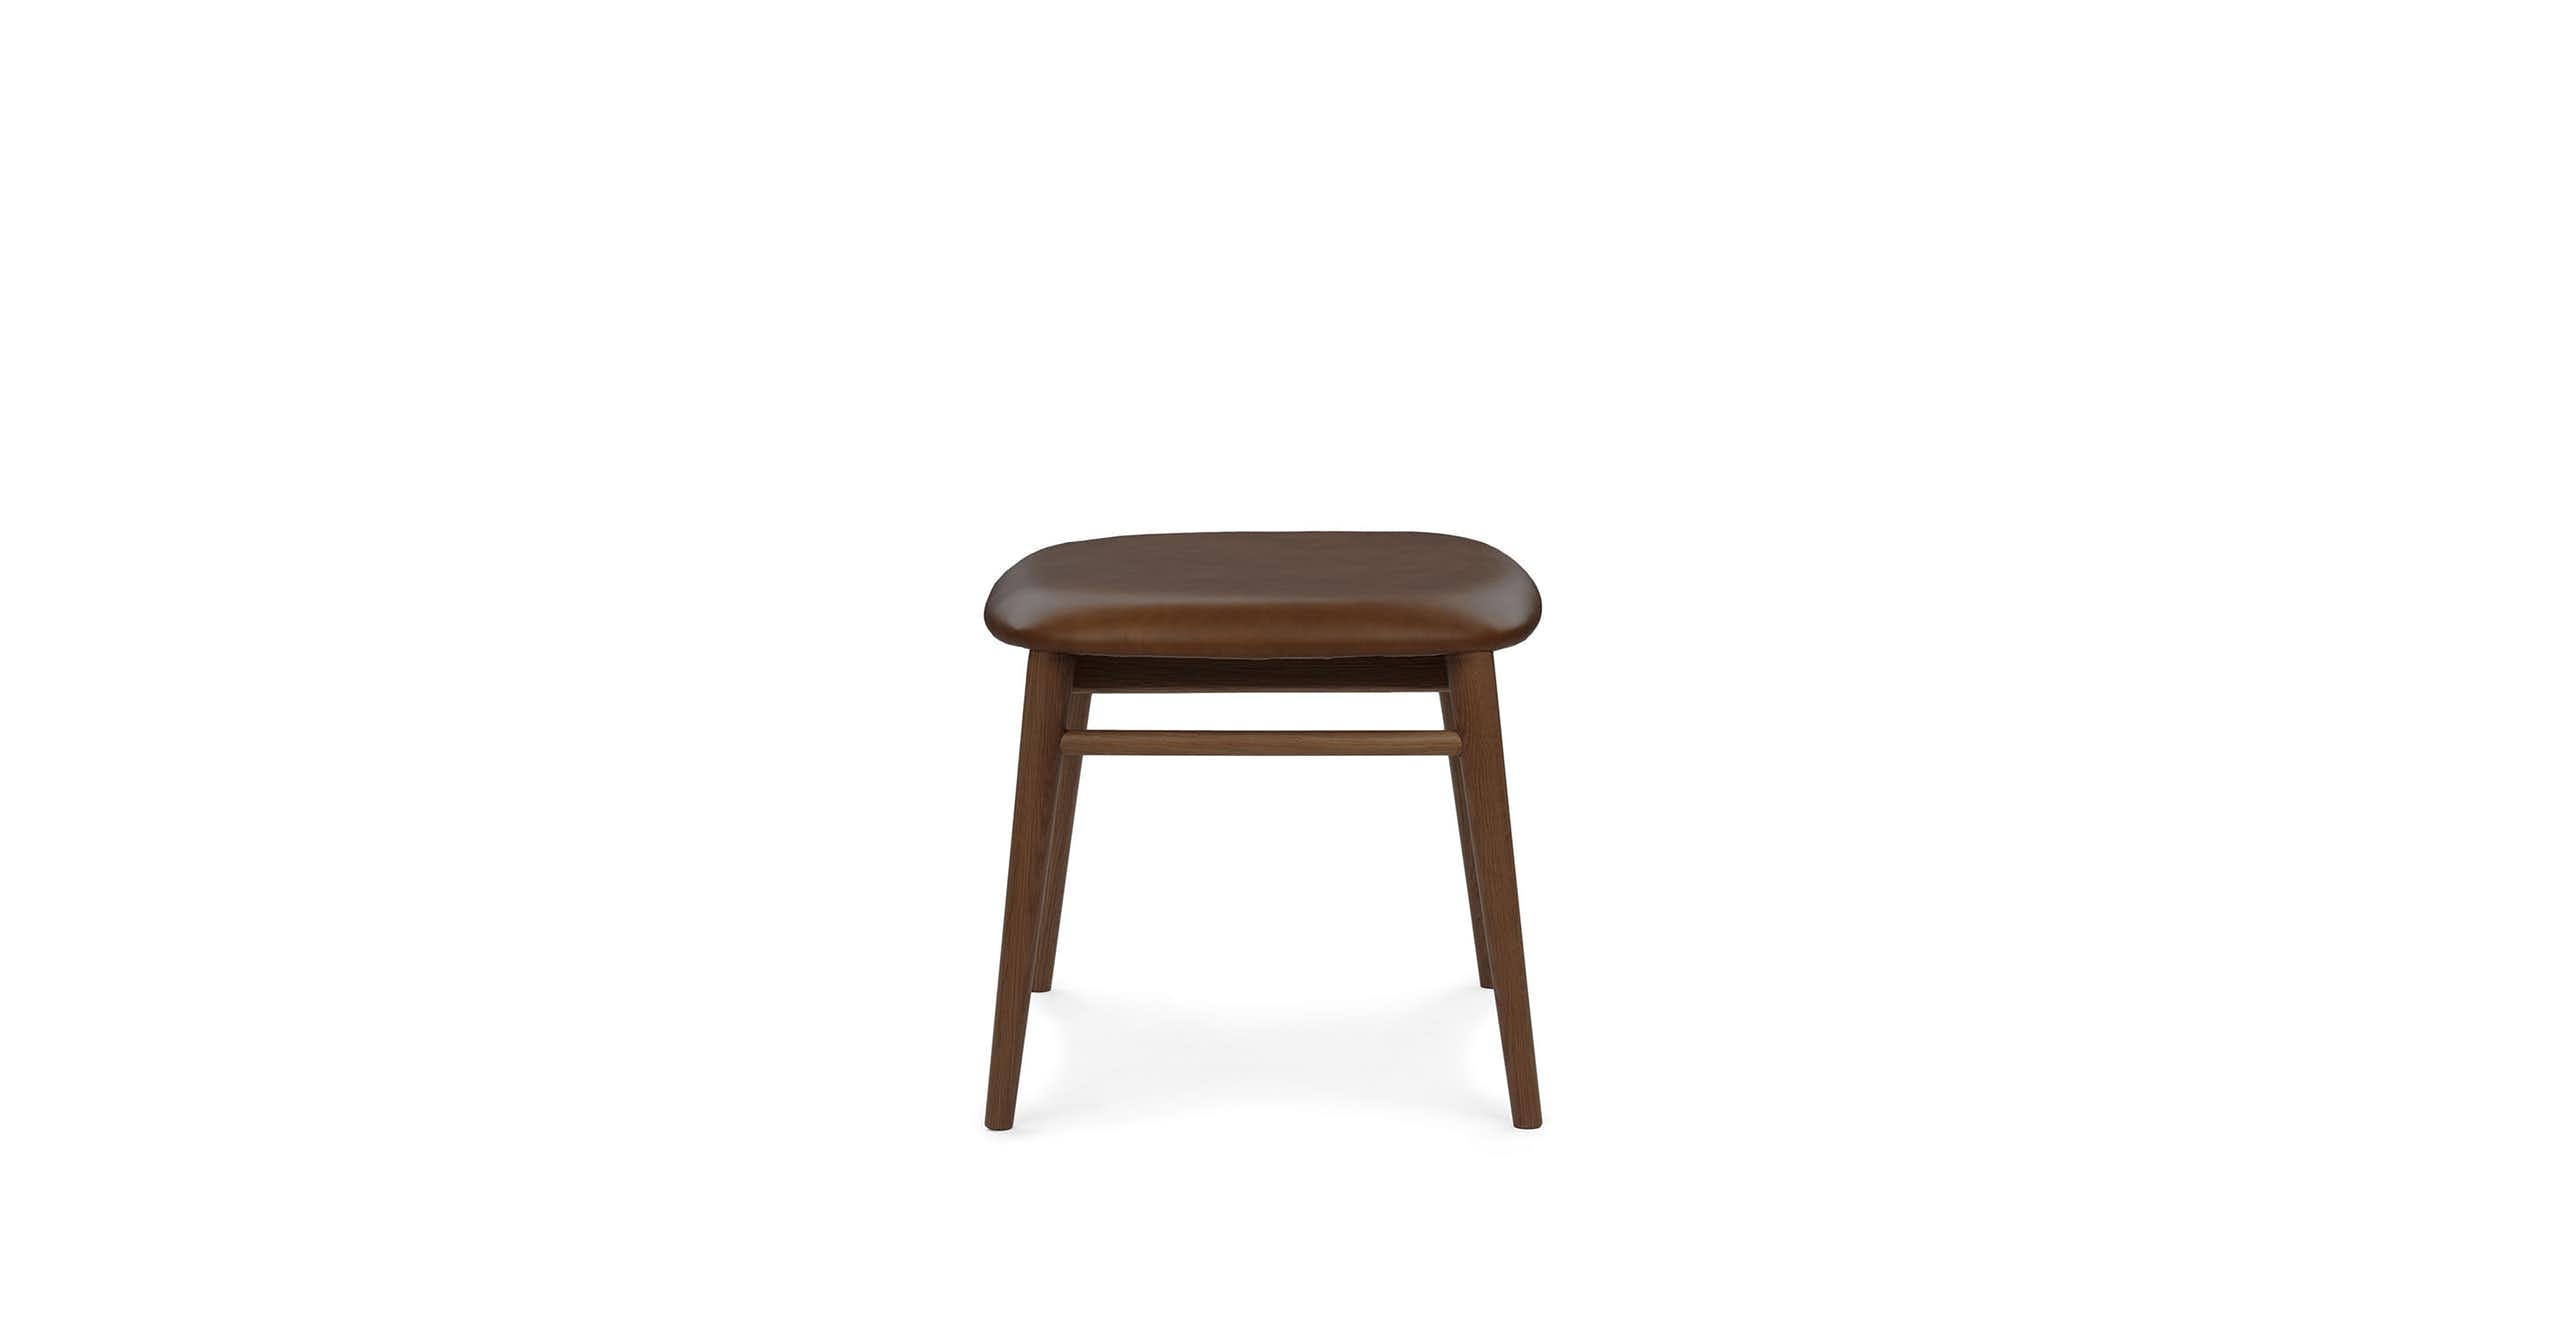 LEVO brown leather ottoman - Image 1